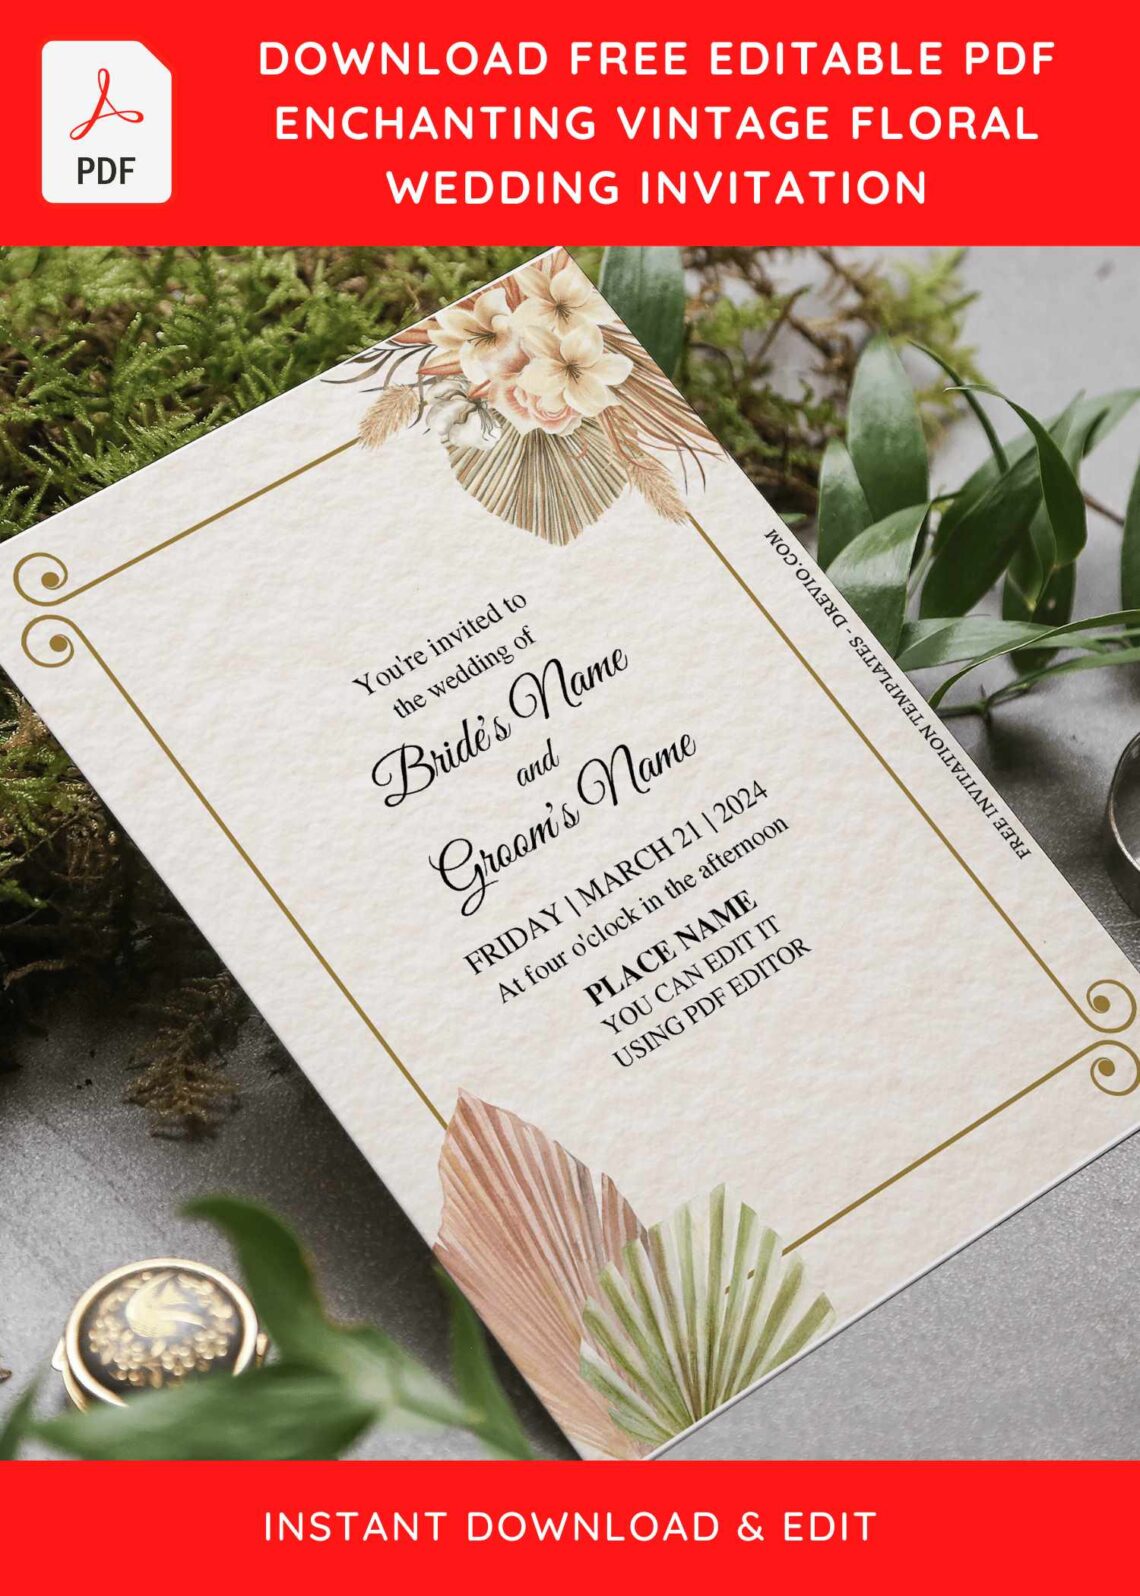 (Free Editable PDF) Simple Vintage Floral Wedding Invitation Templates with Boho Pampas Grass